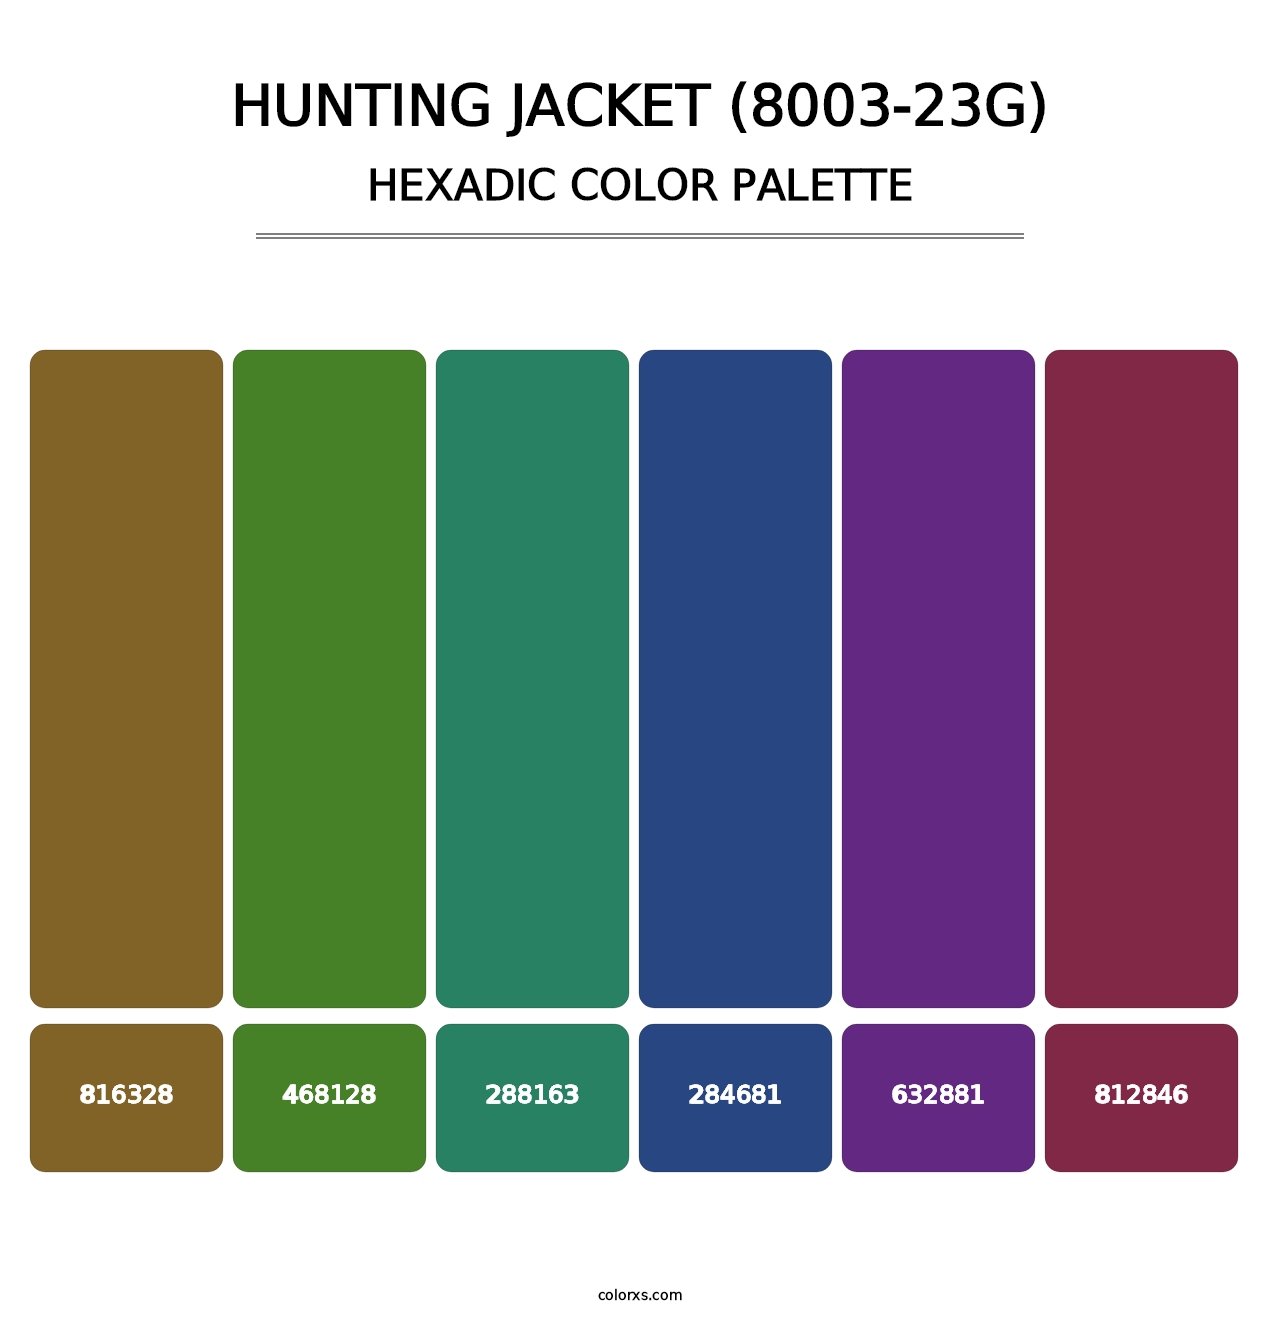 Hunting Jacket (8003-23G) - Hexadic Color Palette